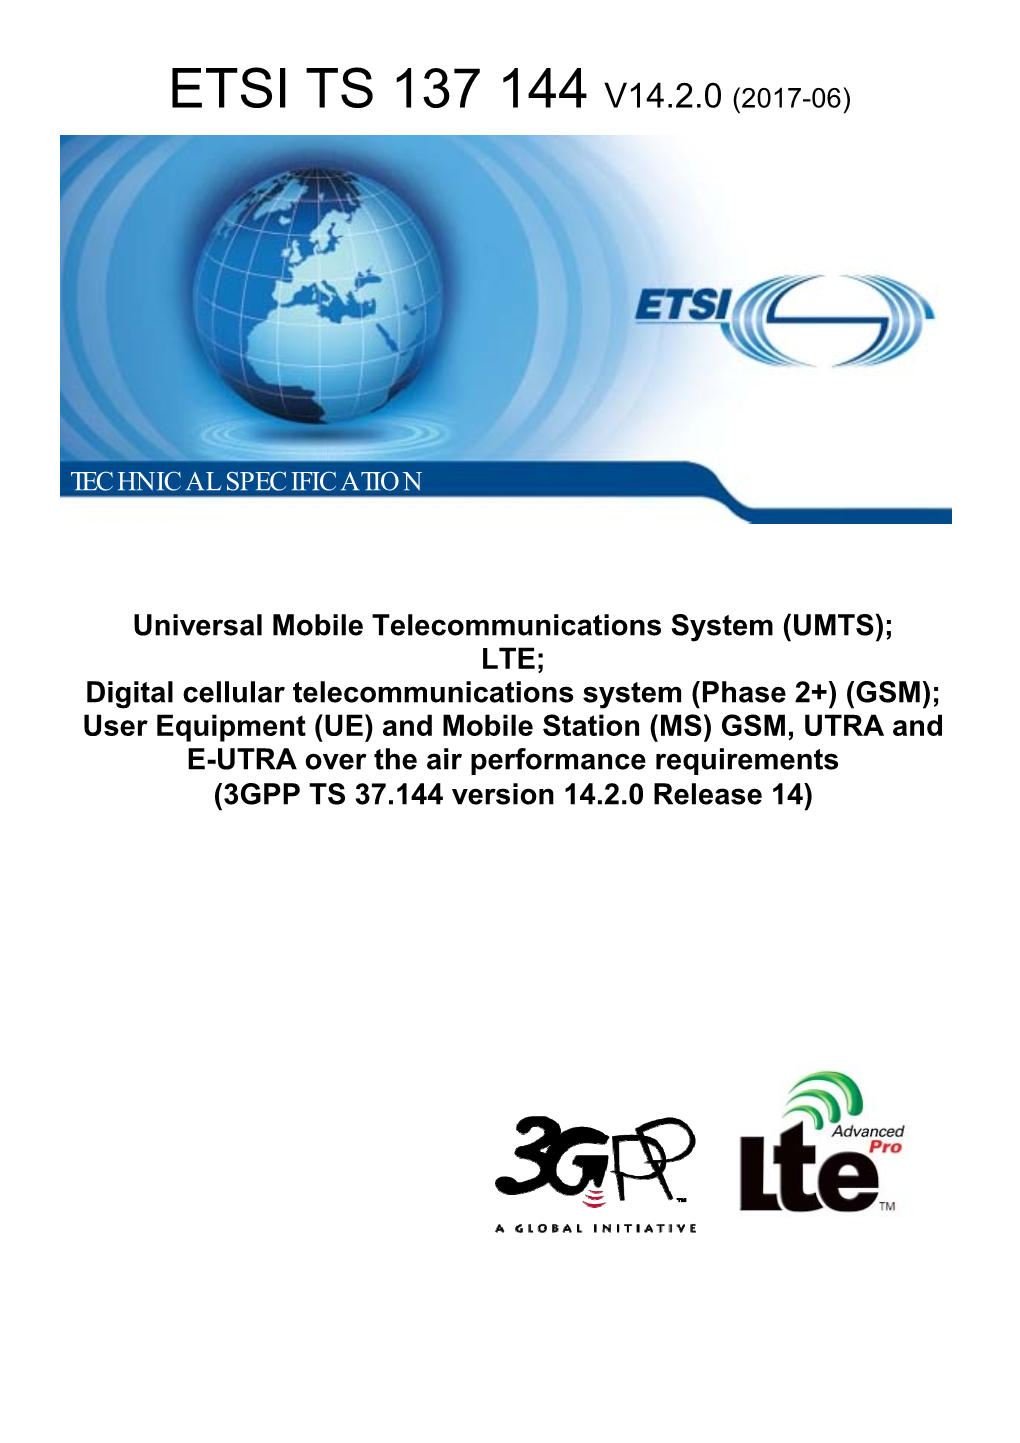 (UMTS); LTE; Digital Cellular Telecommunications System